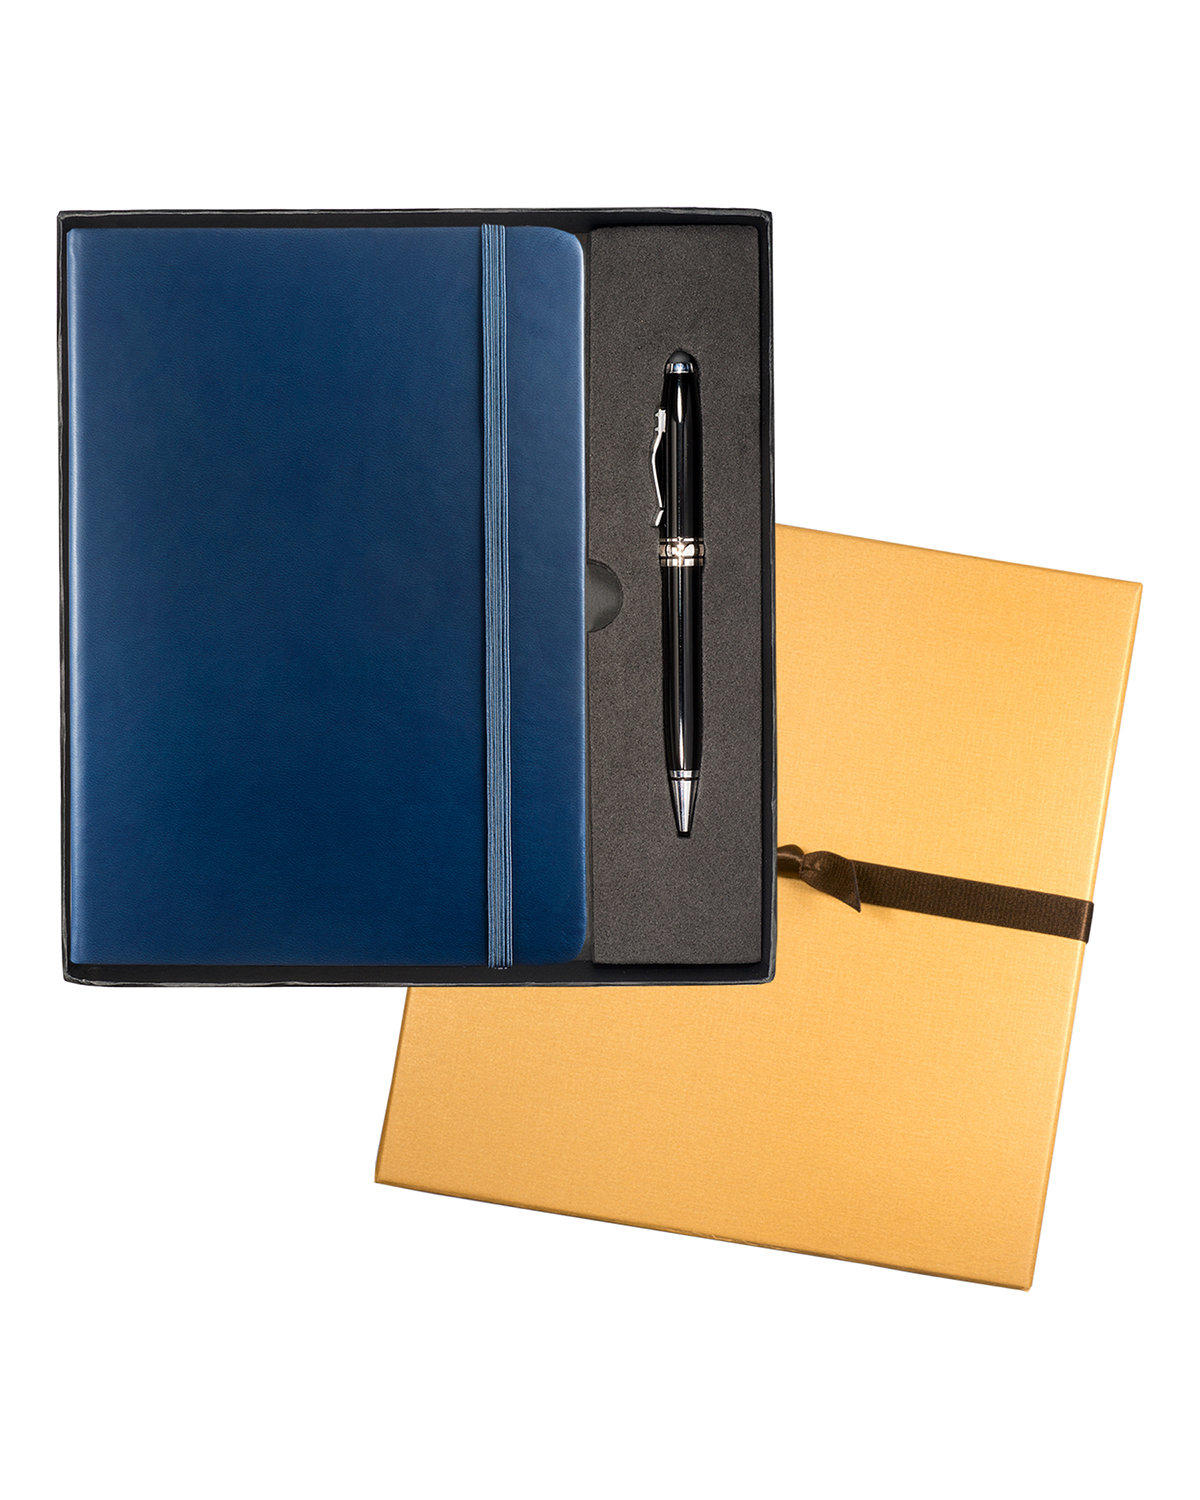 Leeman Tuscany™ Journal And Executive Stylus Pen Set navy blue 